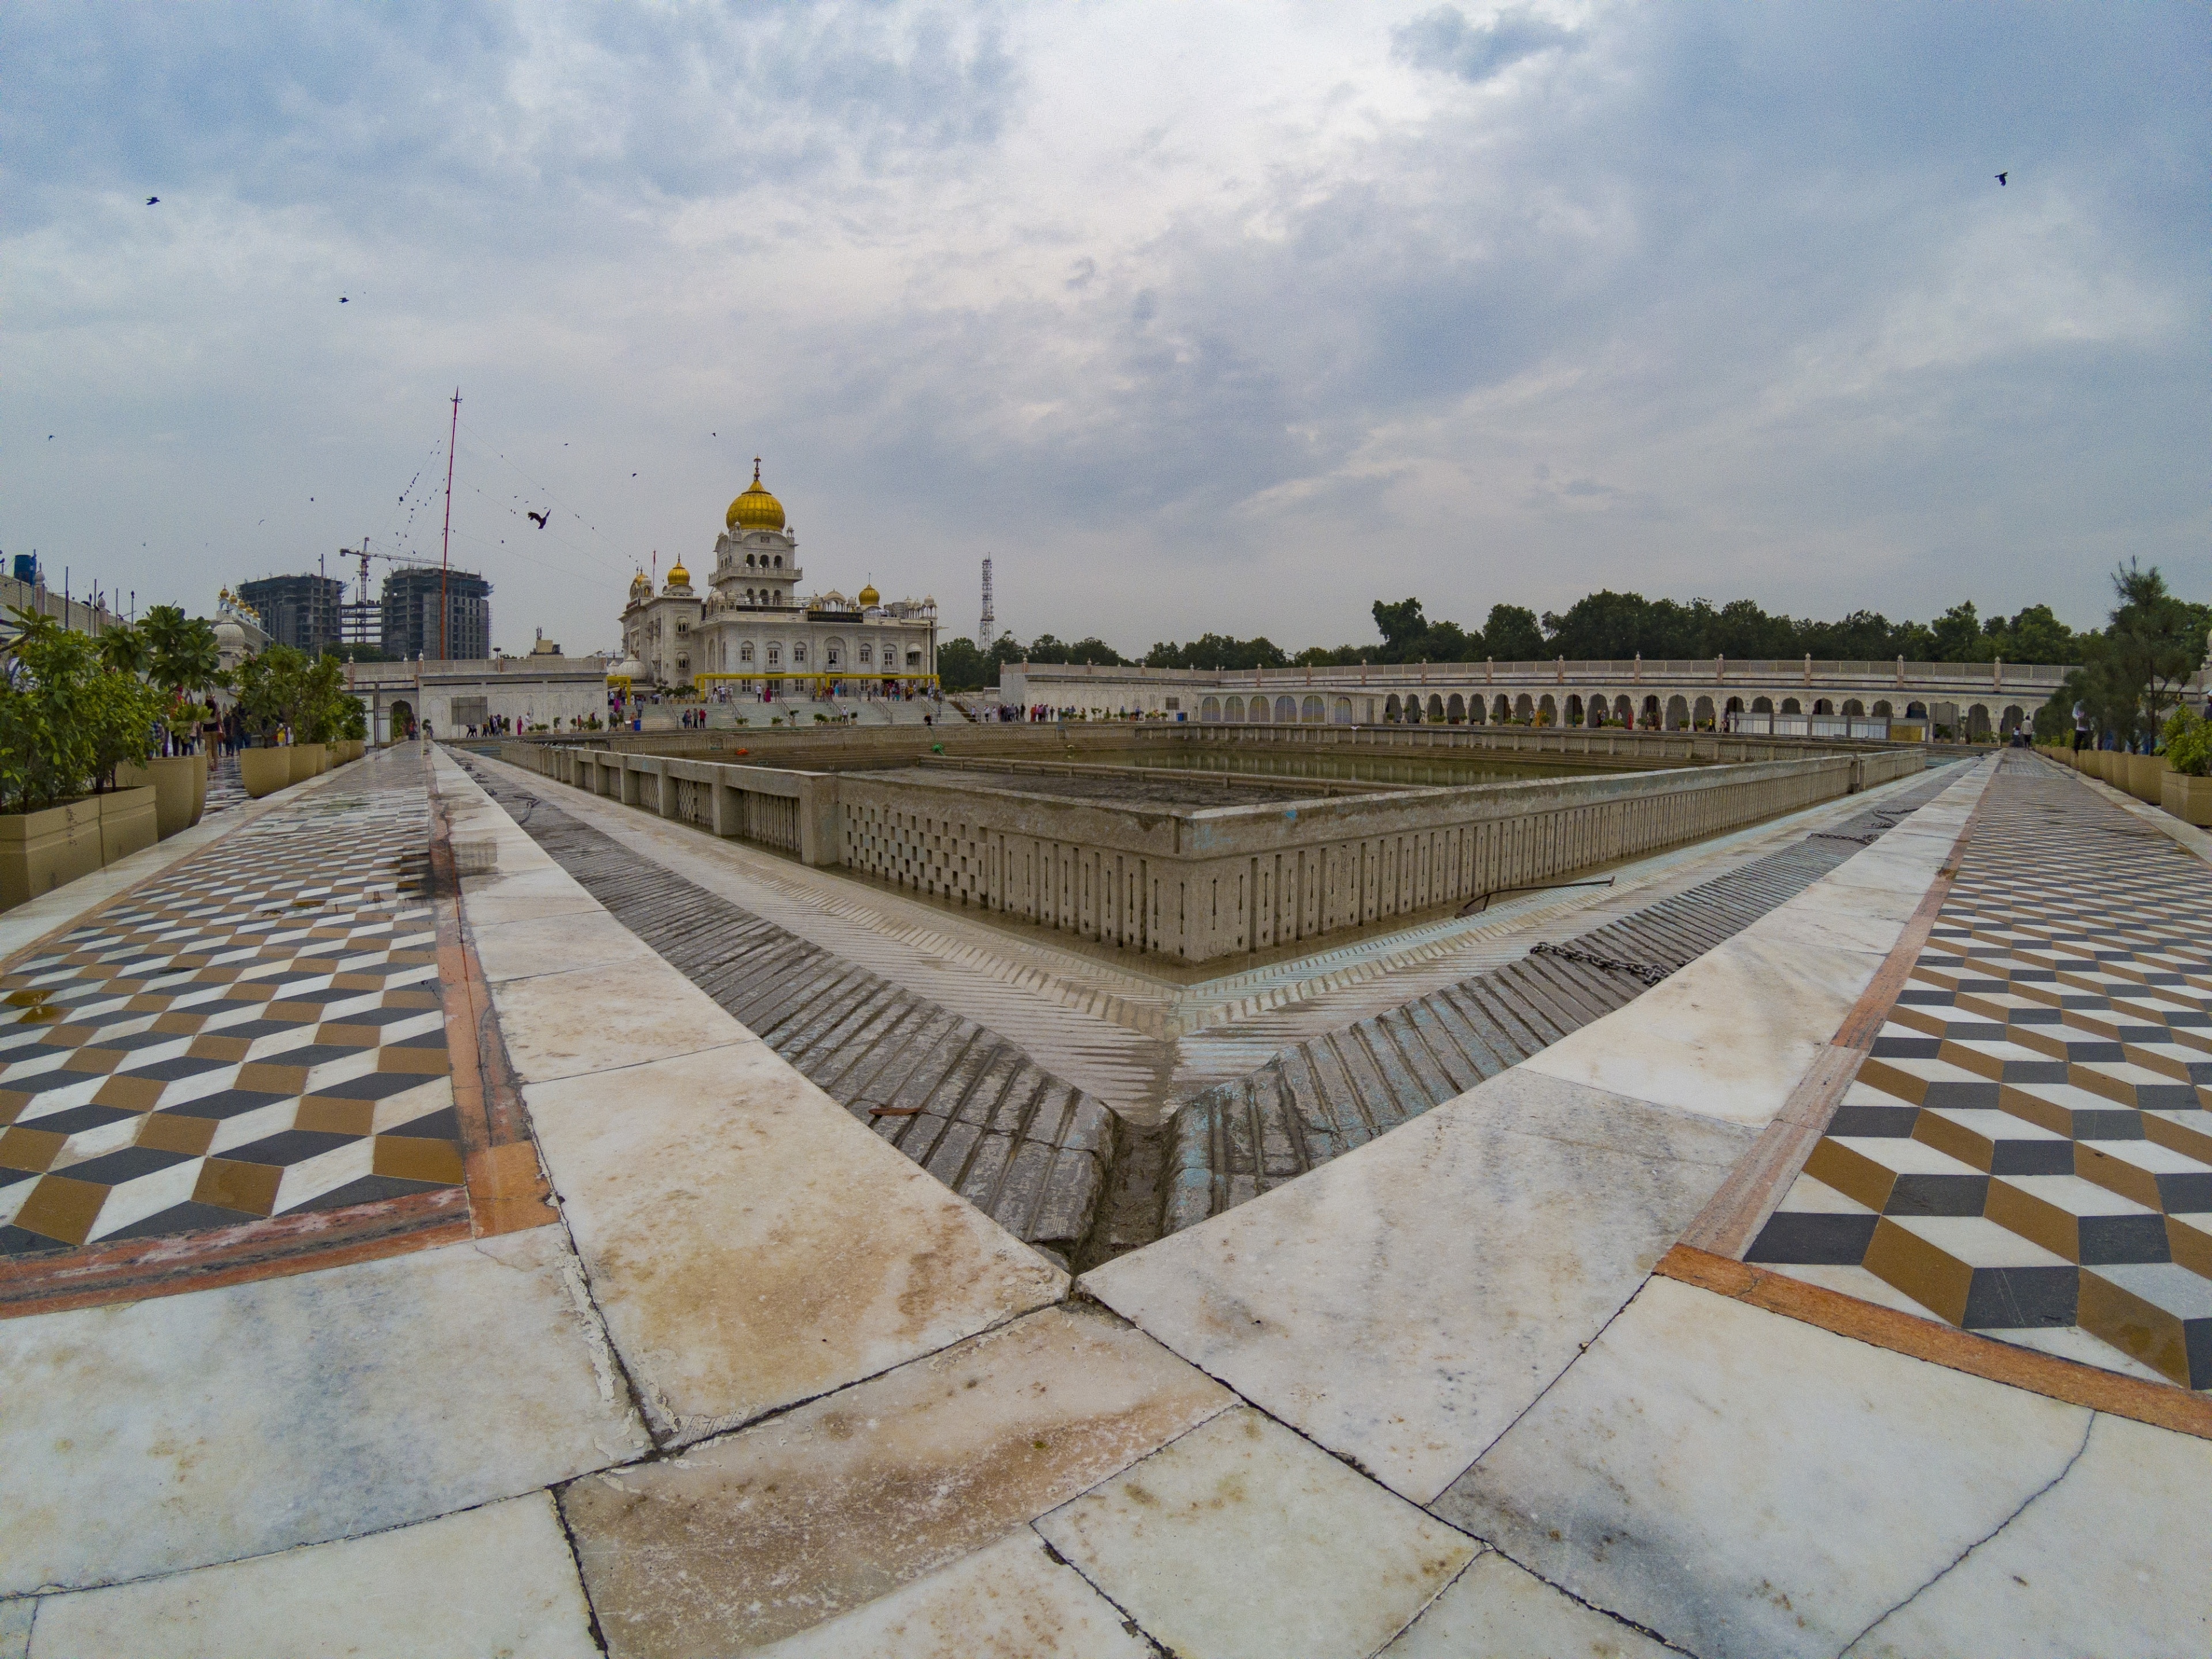 Satnam Shri Waheguru ☬ #lifeatexpedia #architecture #column #holyplace #religion #India #gurudwara #BanglaSahib #likealocal